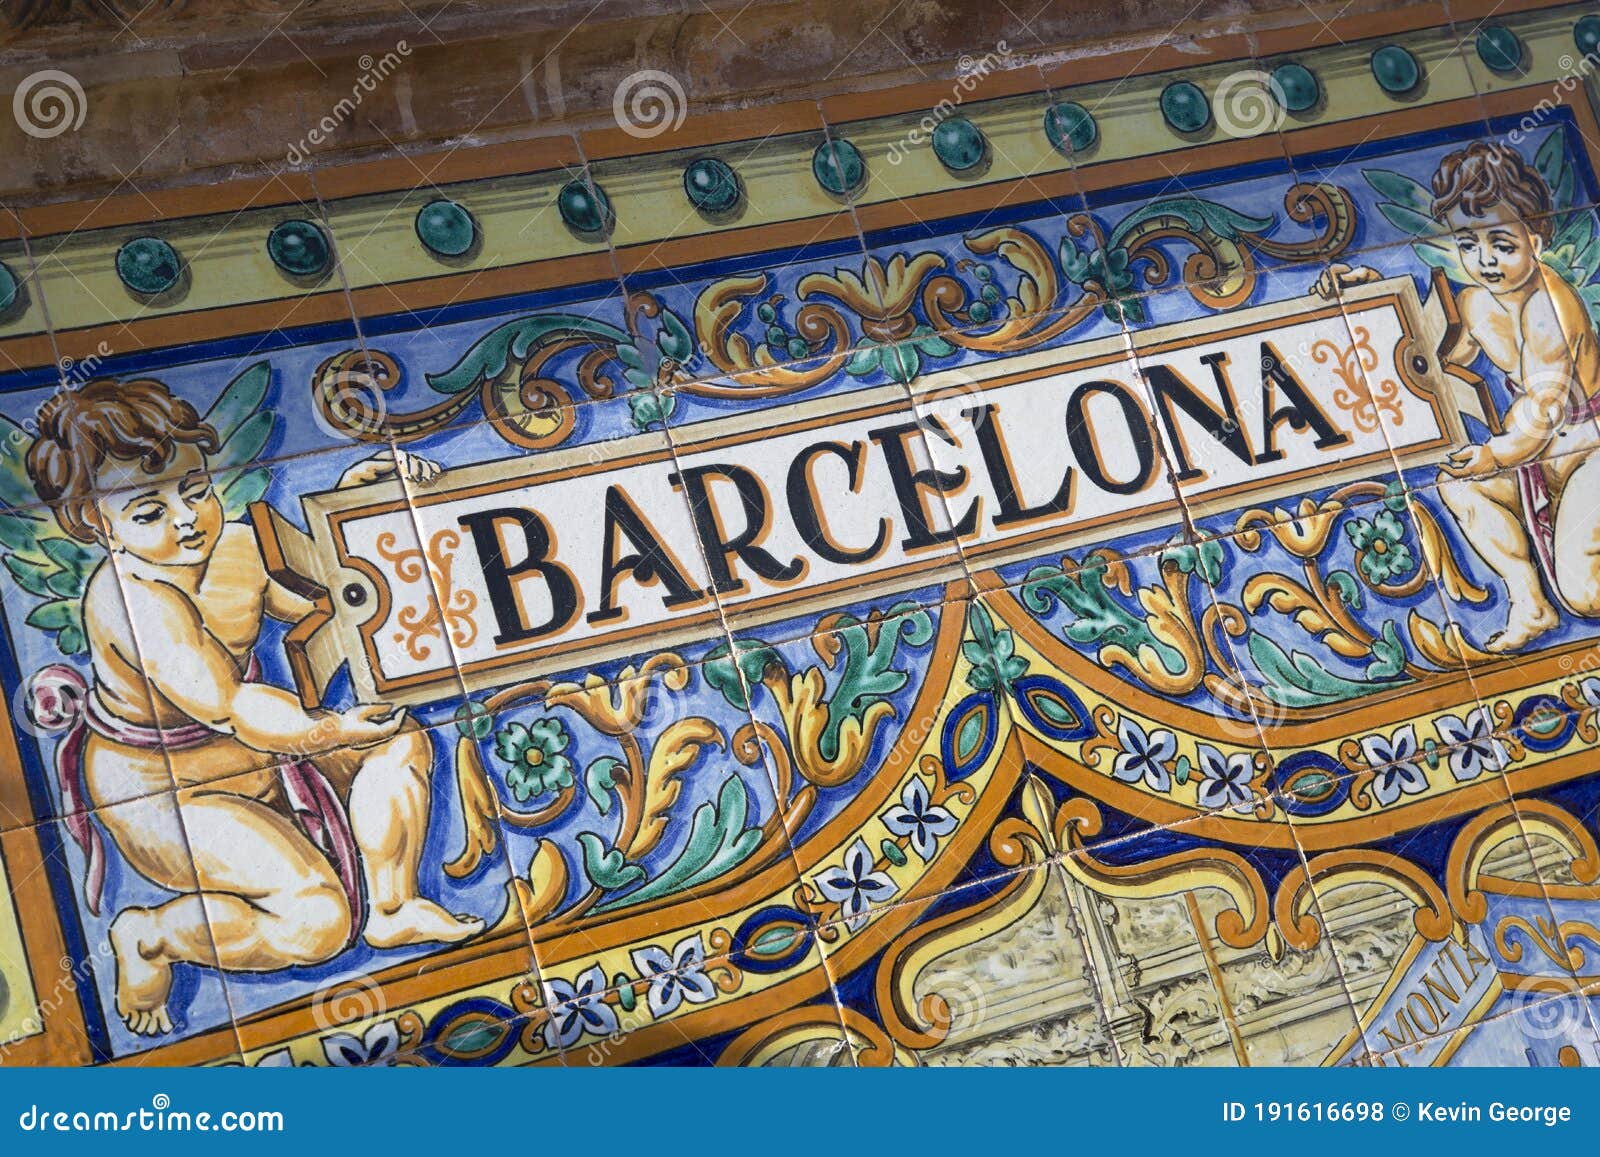 barcelona sign; plaza de espana square, seville